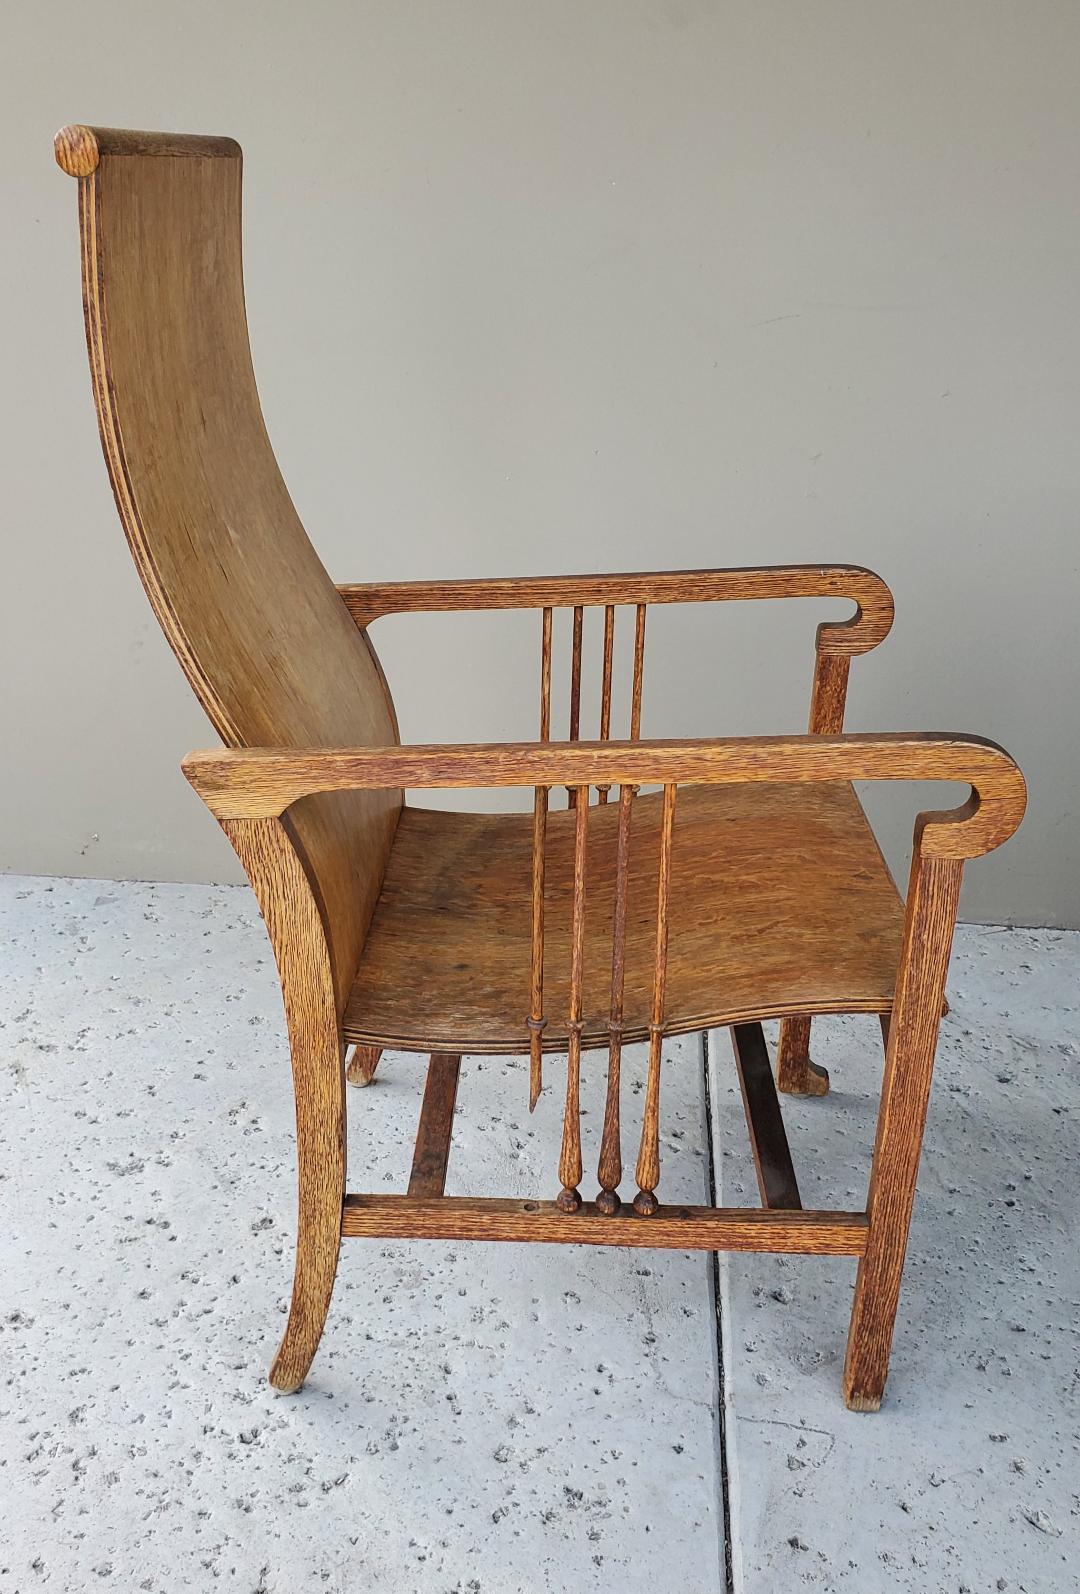 Antique Mission Arts & Crafts Craftsman Quarter Sawn Oak Tall Back Resting Chair For Sale 7